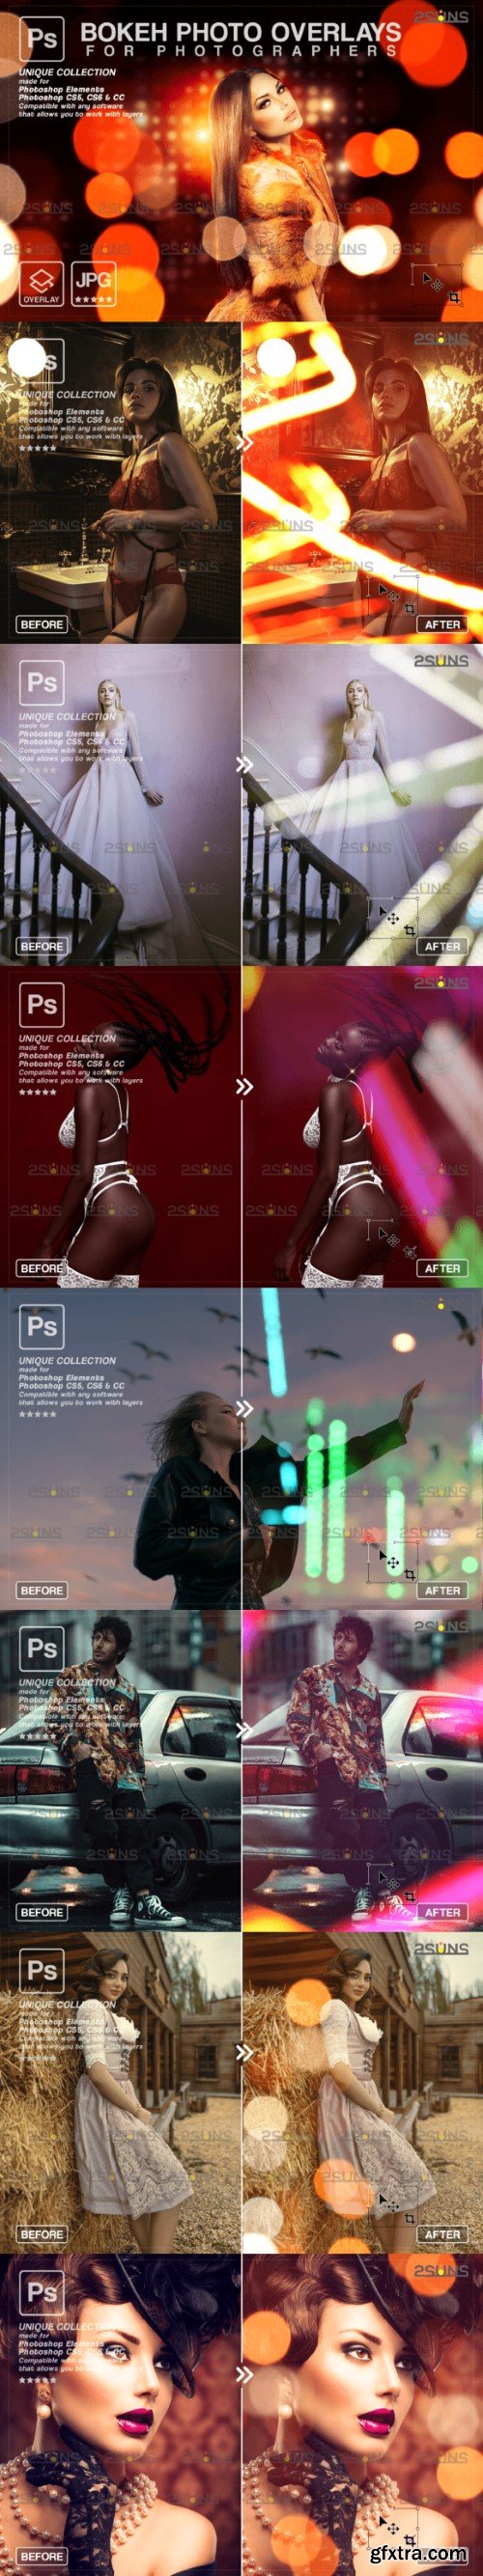 Neon Overlays Bokeh Photoshop Textures